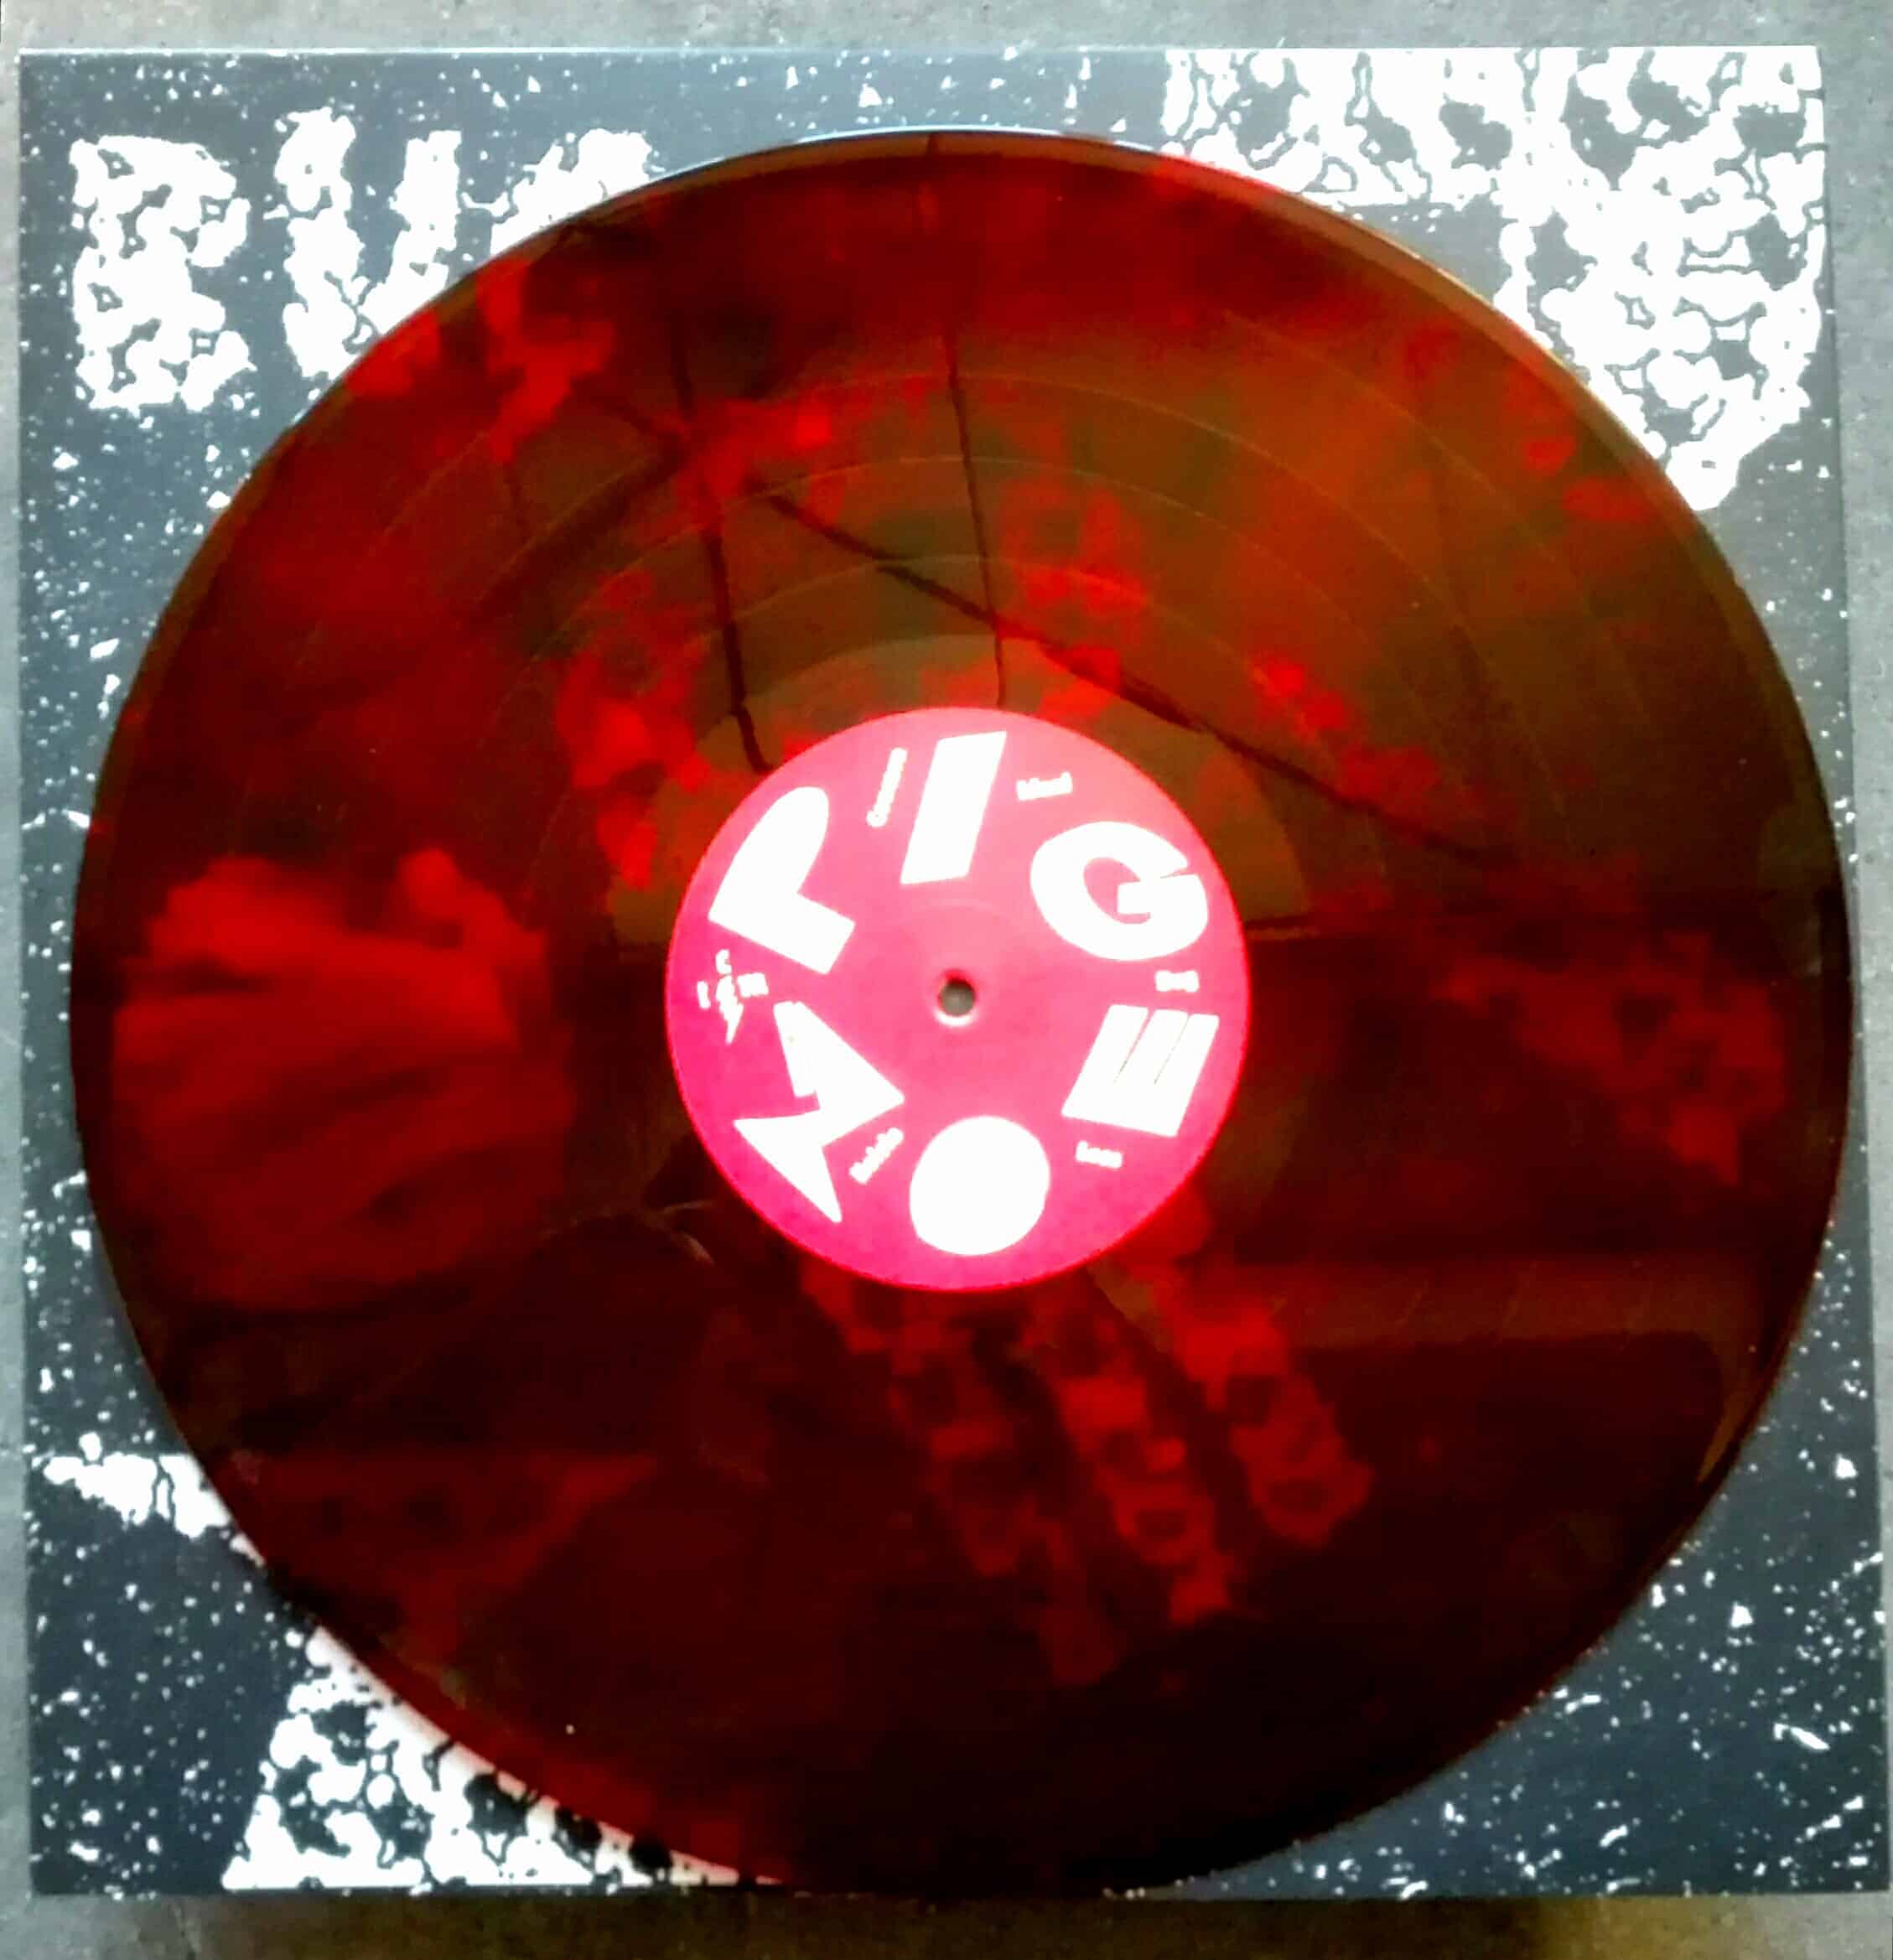 Pigeon - Bug 12" 180 Gramm Vinyl, 2 variants -> red (mailorder exclusive) & black